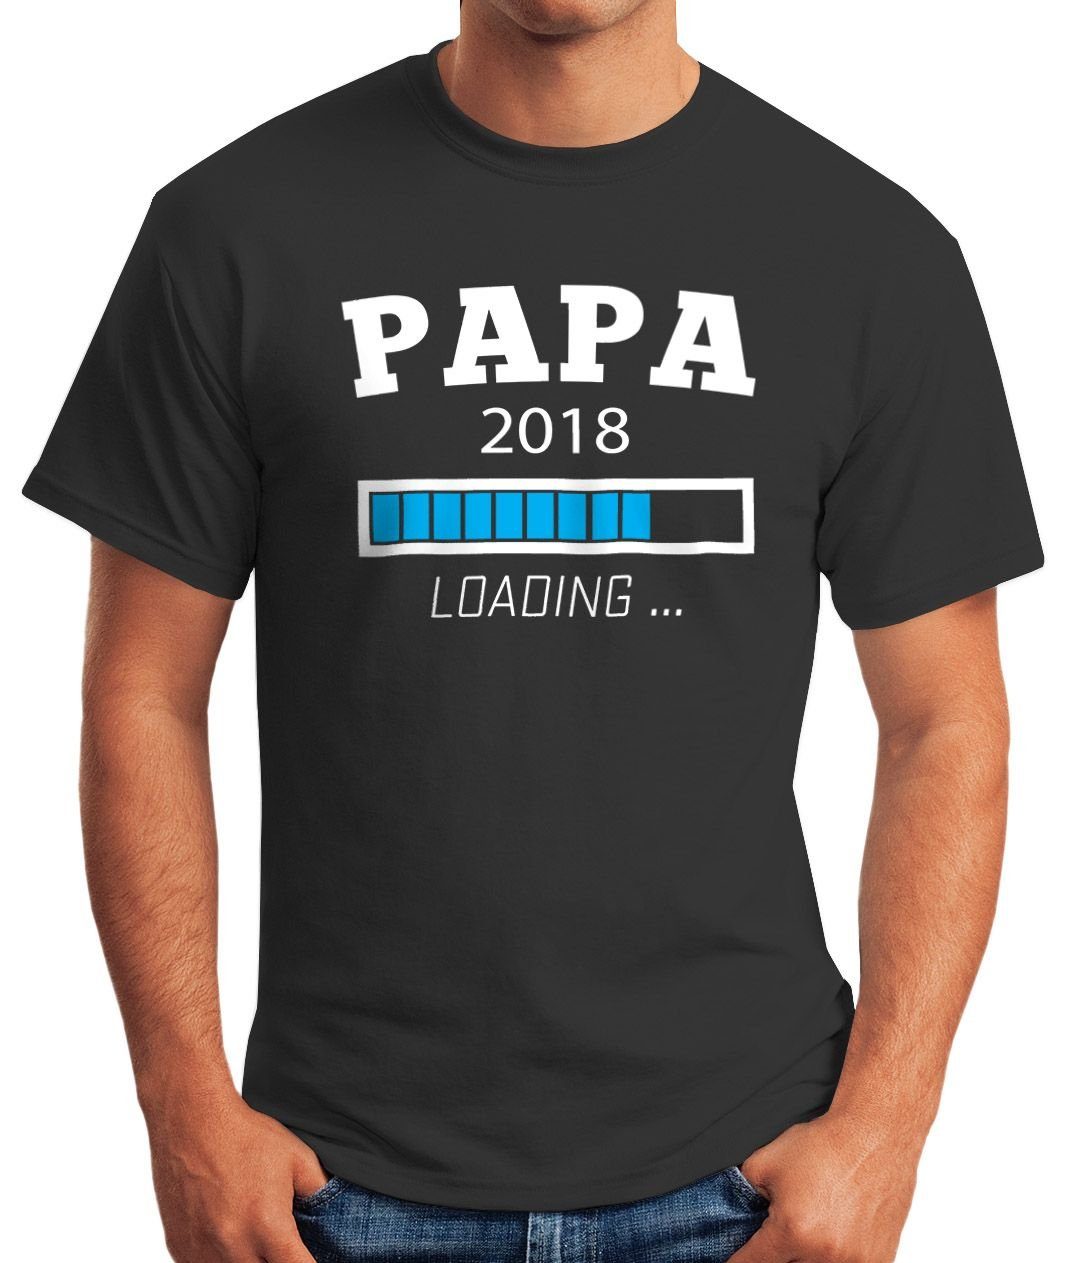 Moonworks® Loading schwarz Herren Shirt T-Shirt mit Papa MoonWorks Print 2018 Print-Shirt